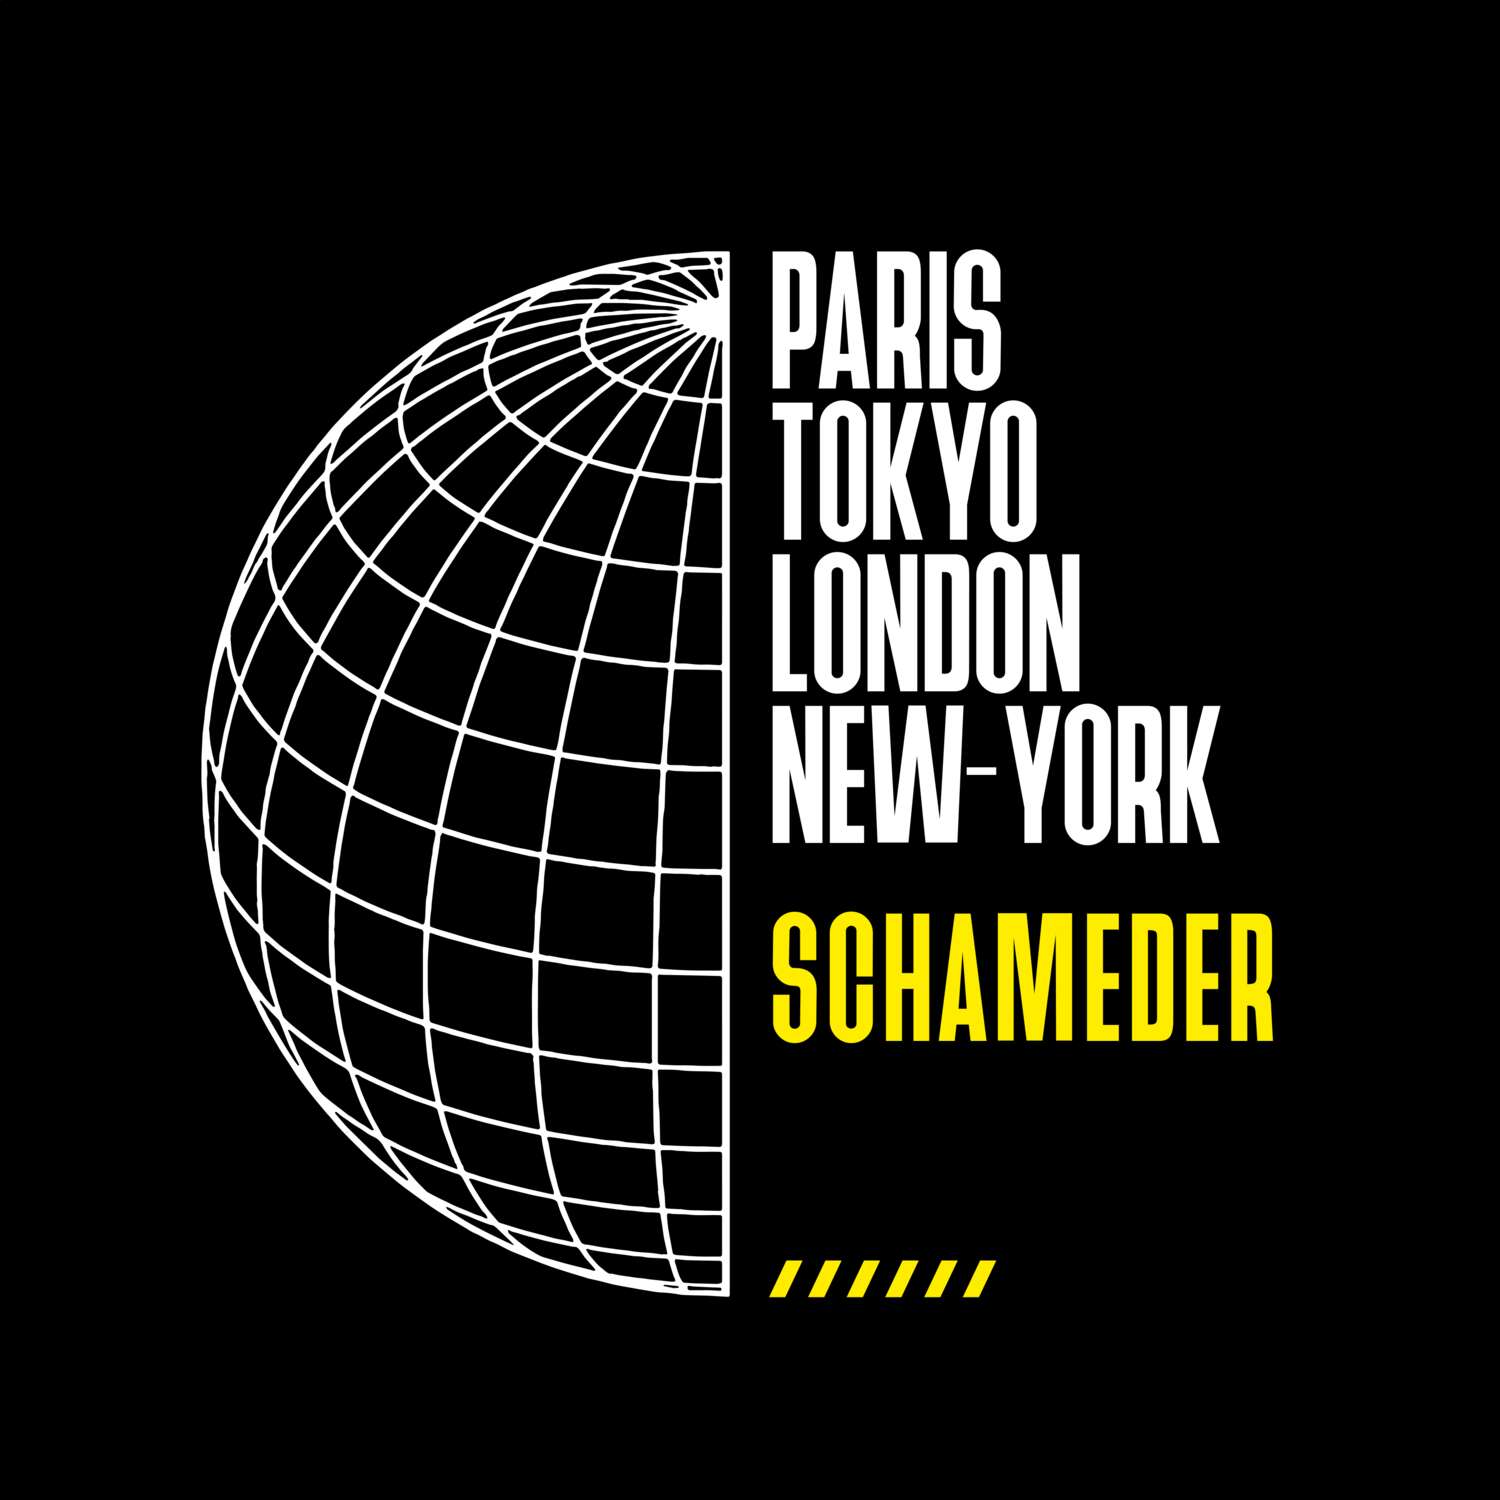 Schameder T-Shirt »Paris Tokyo London«